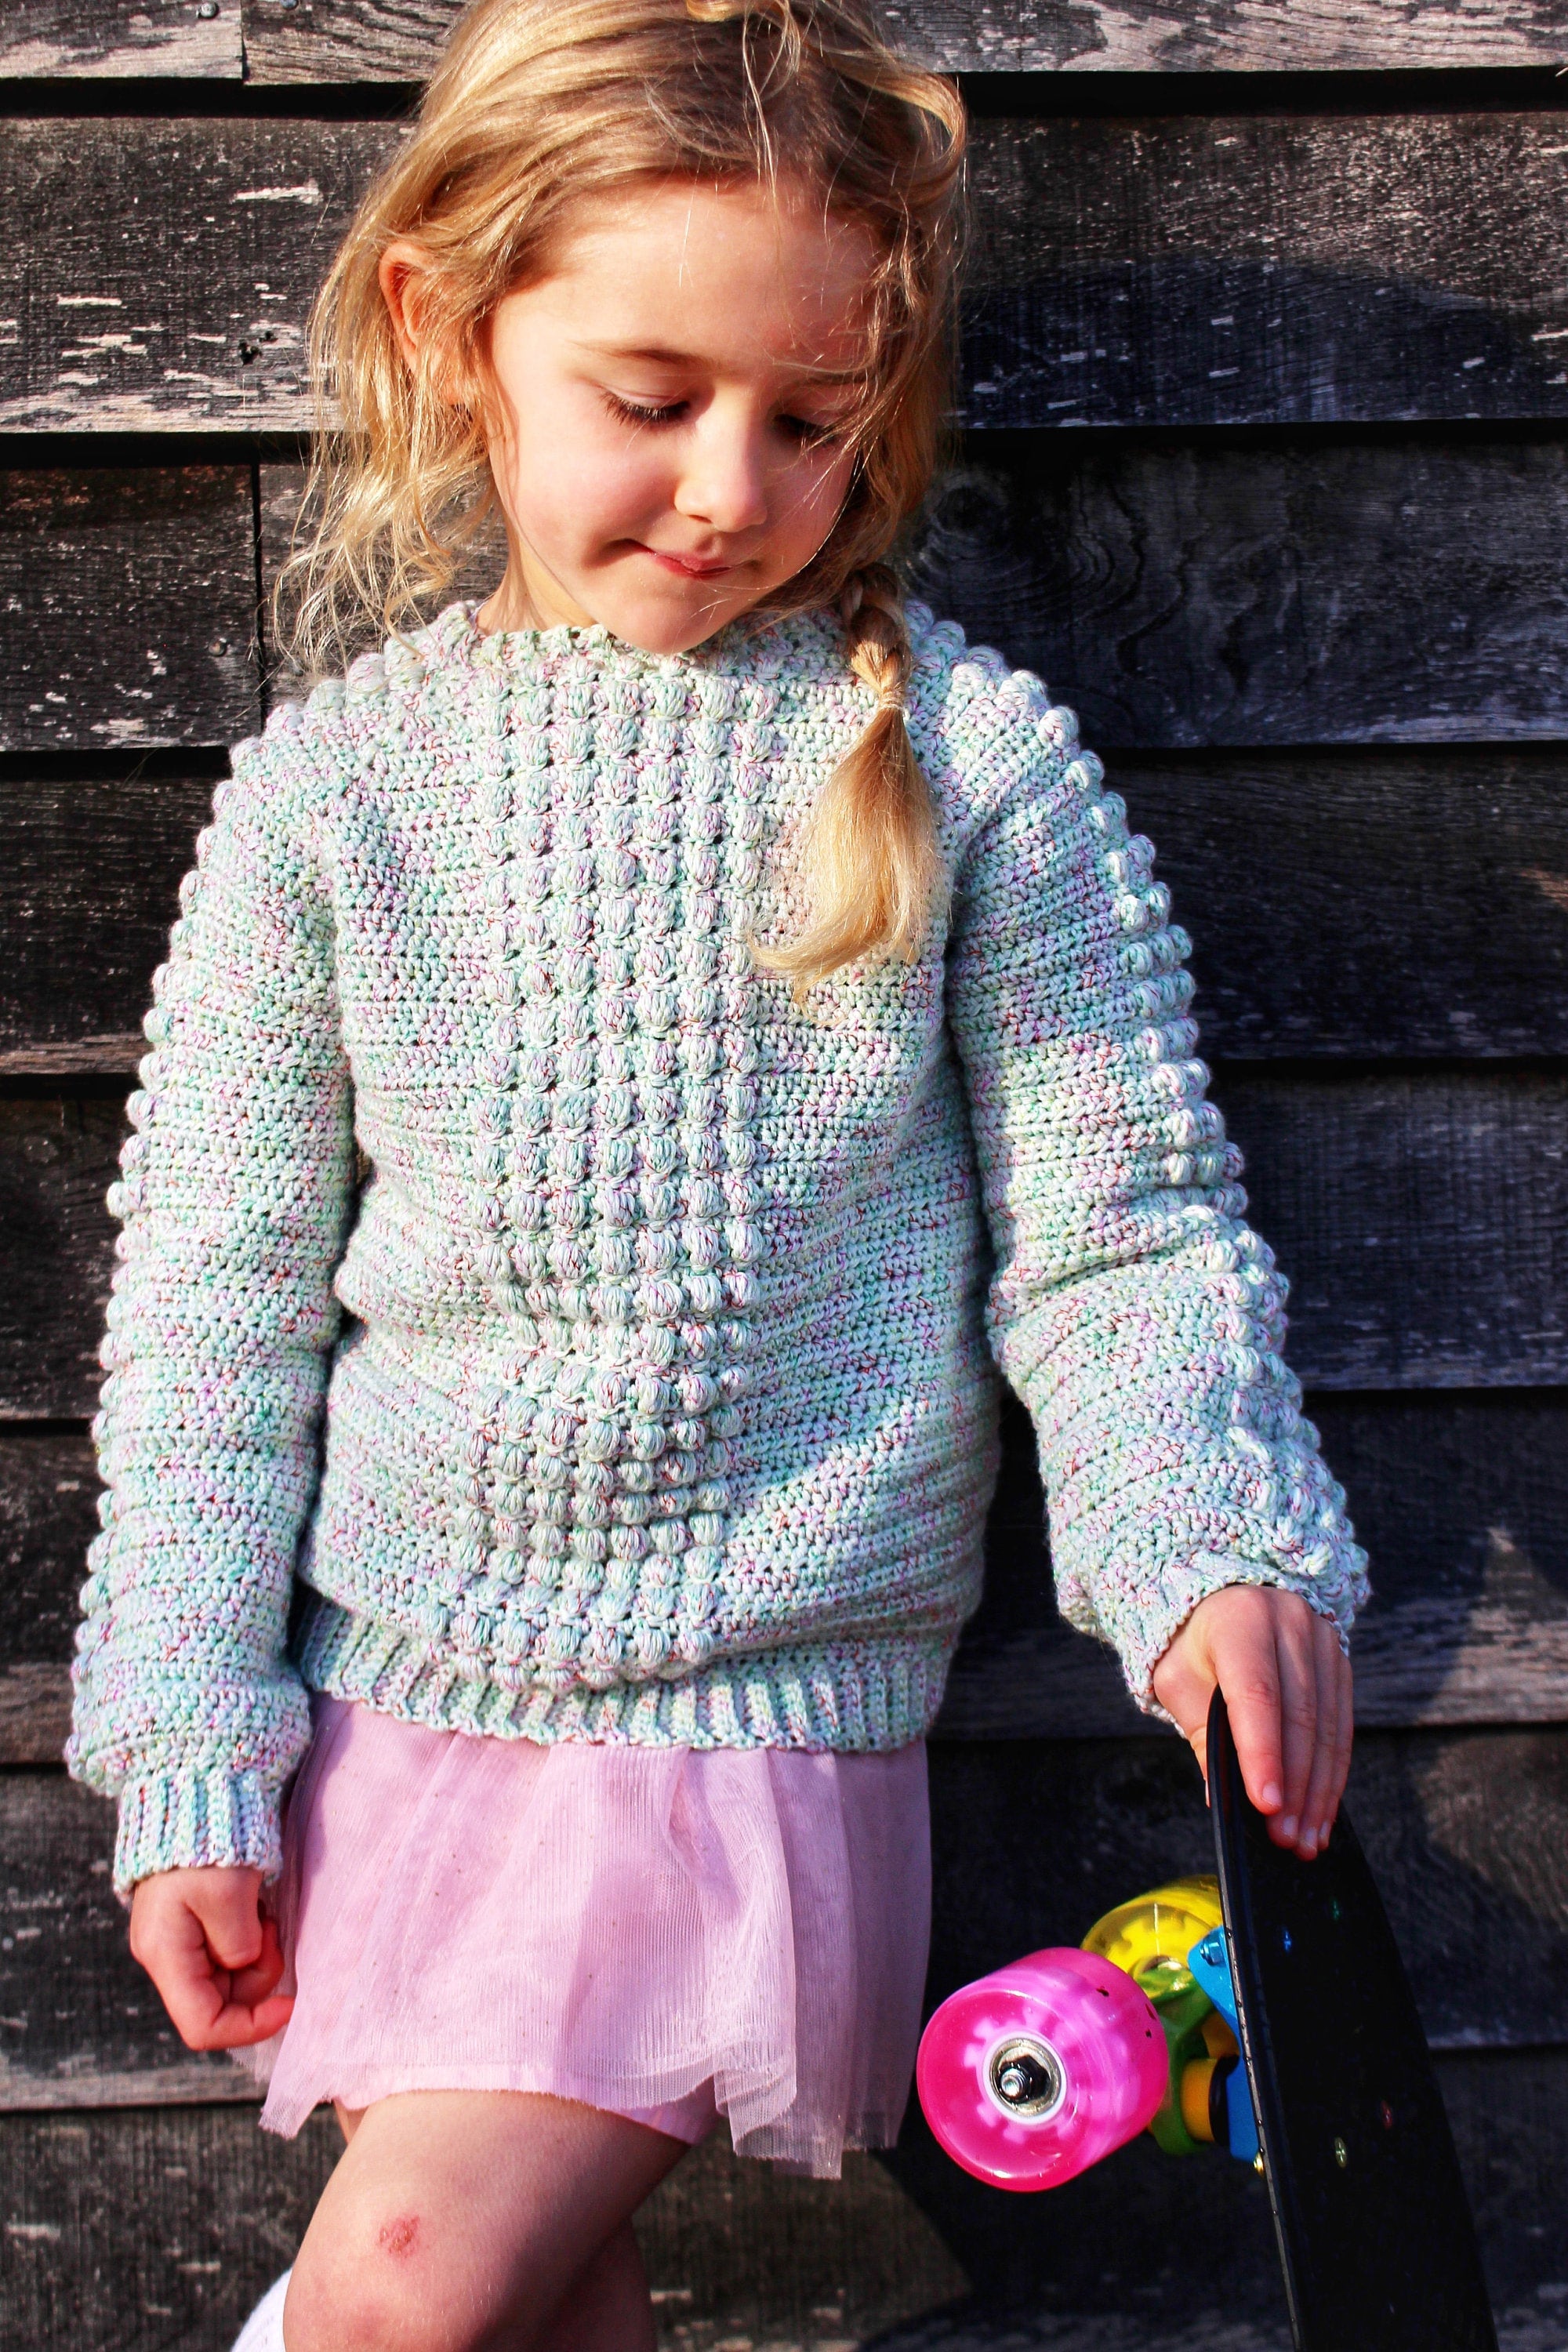 crochet for kids – The Moule Hole